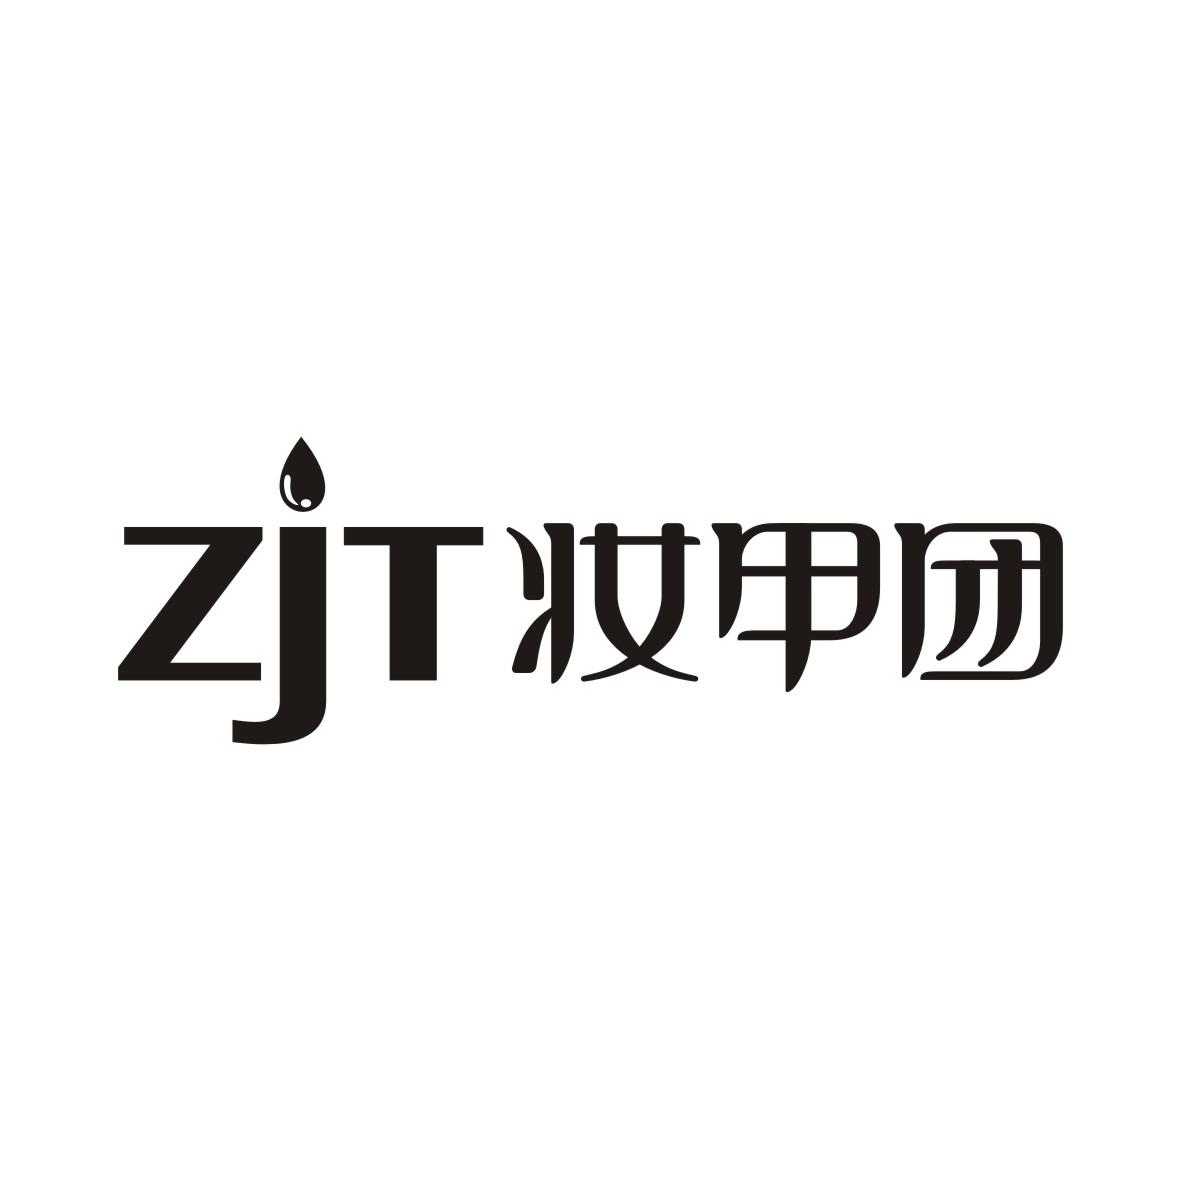 ZJT 妆甲团商标图片